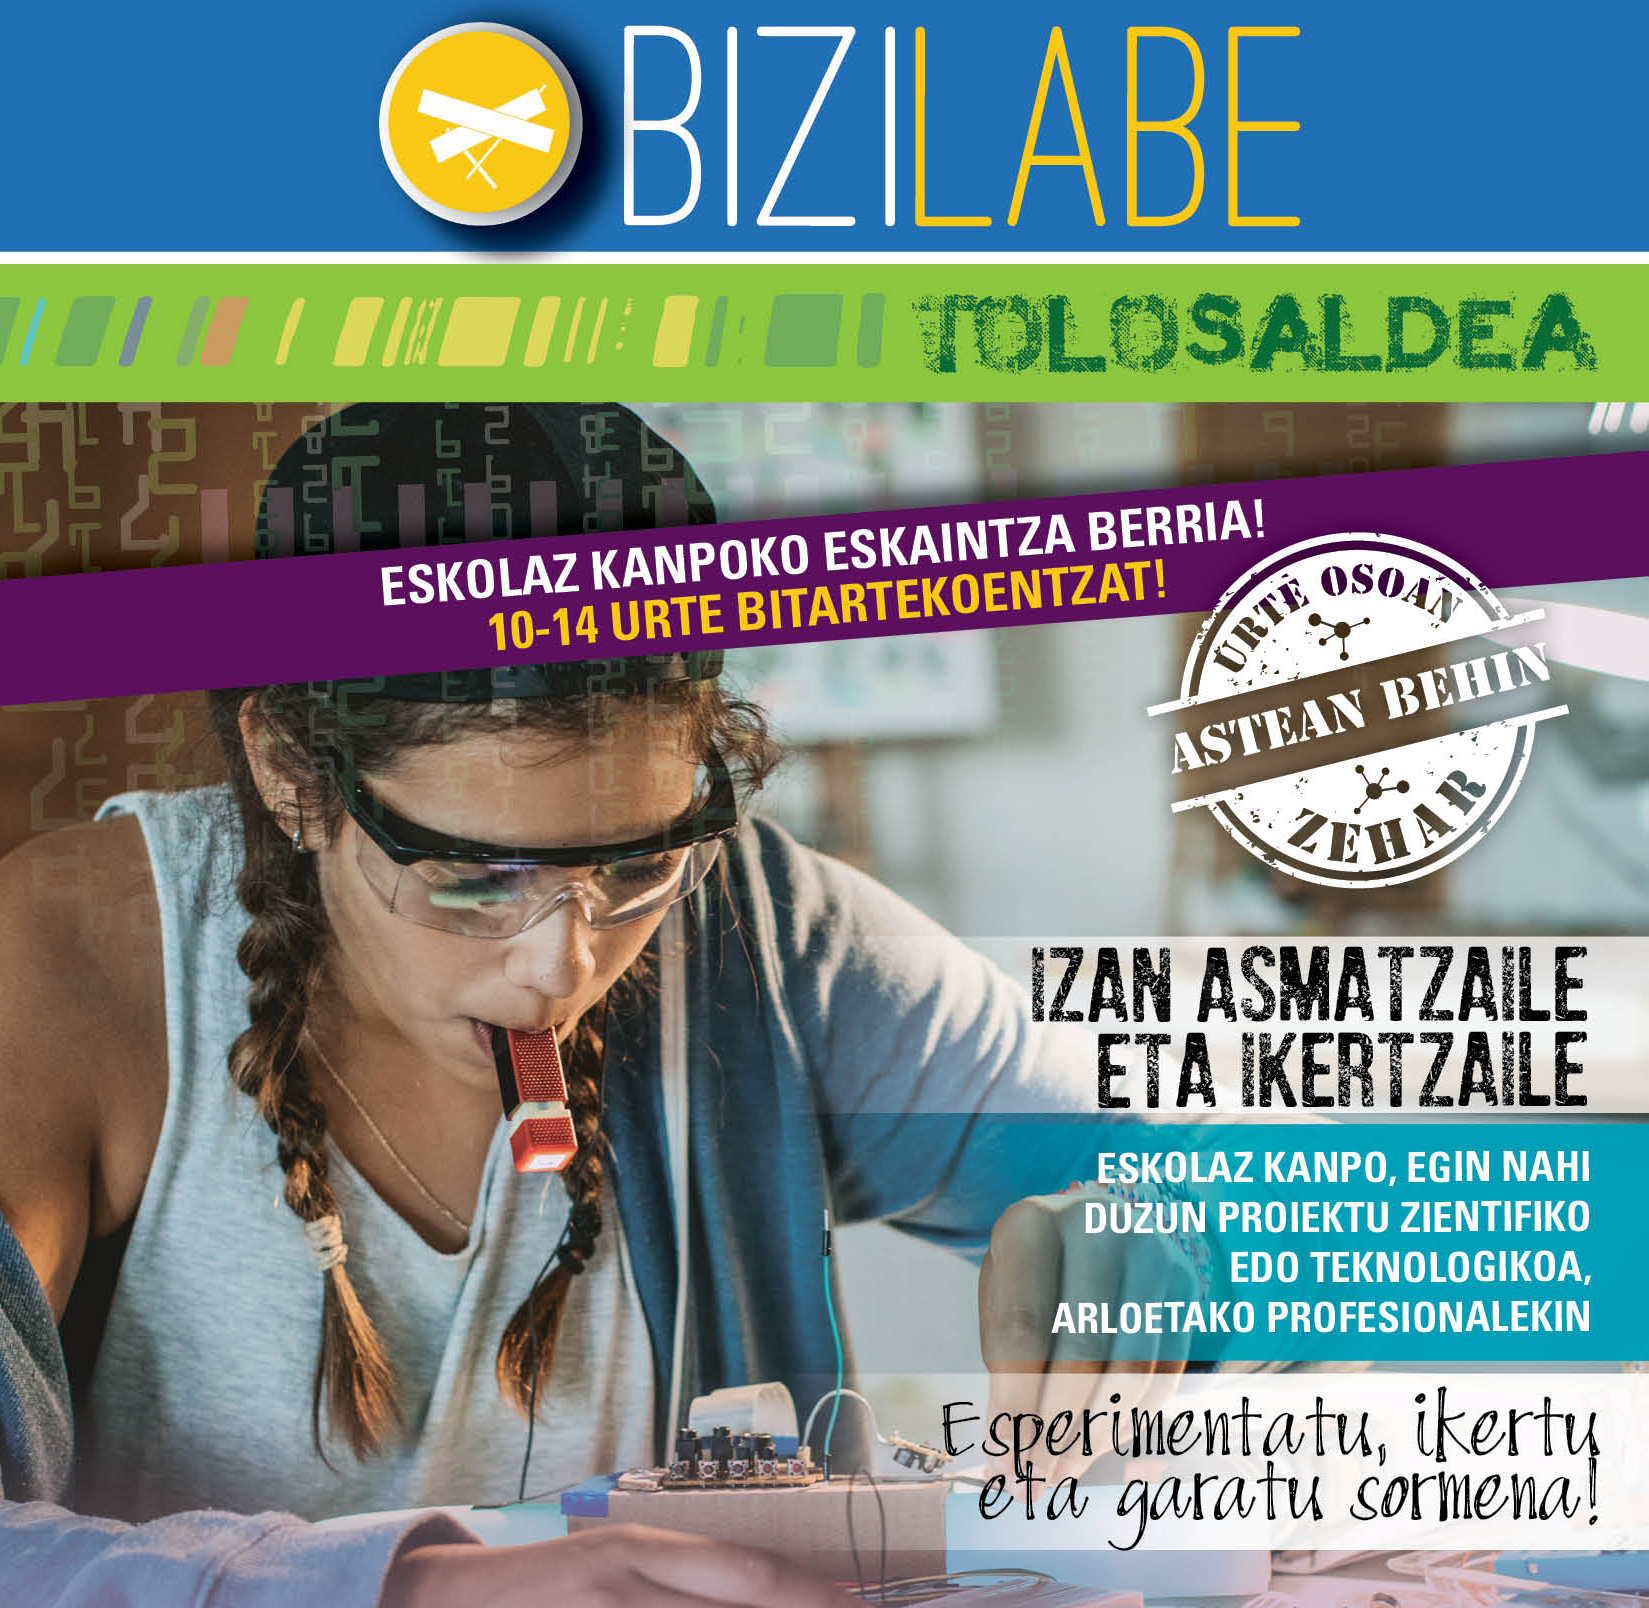 BZL Tolosaldea 2020-2021_tailer-portada.jpg